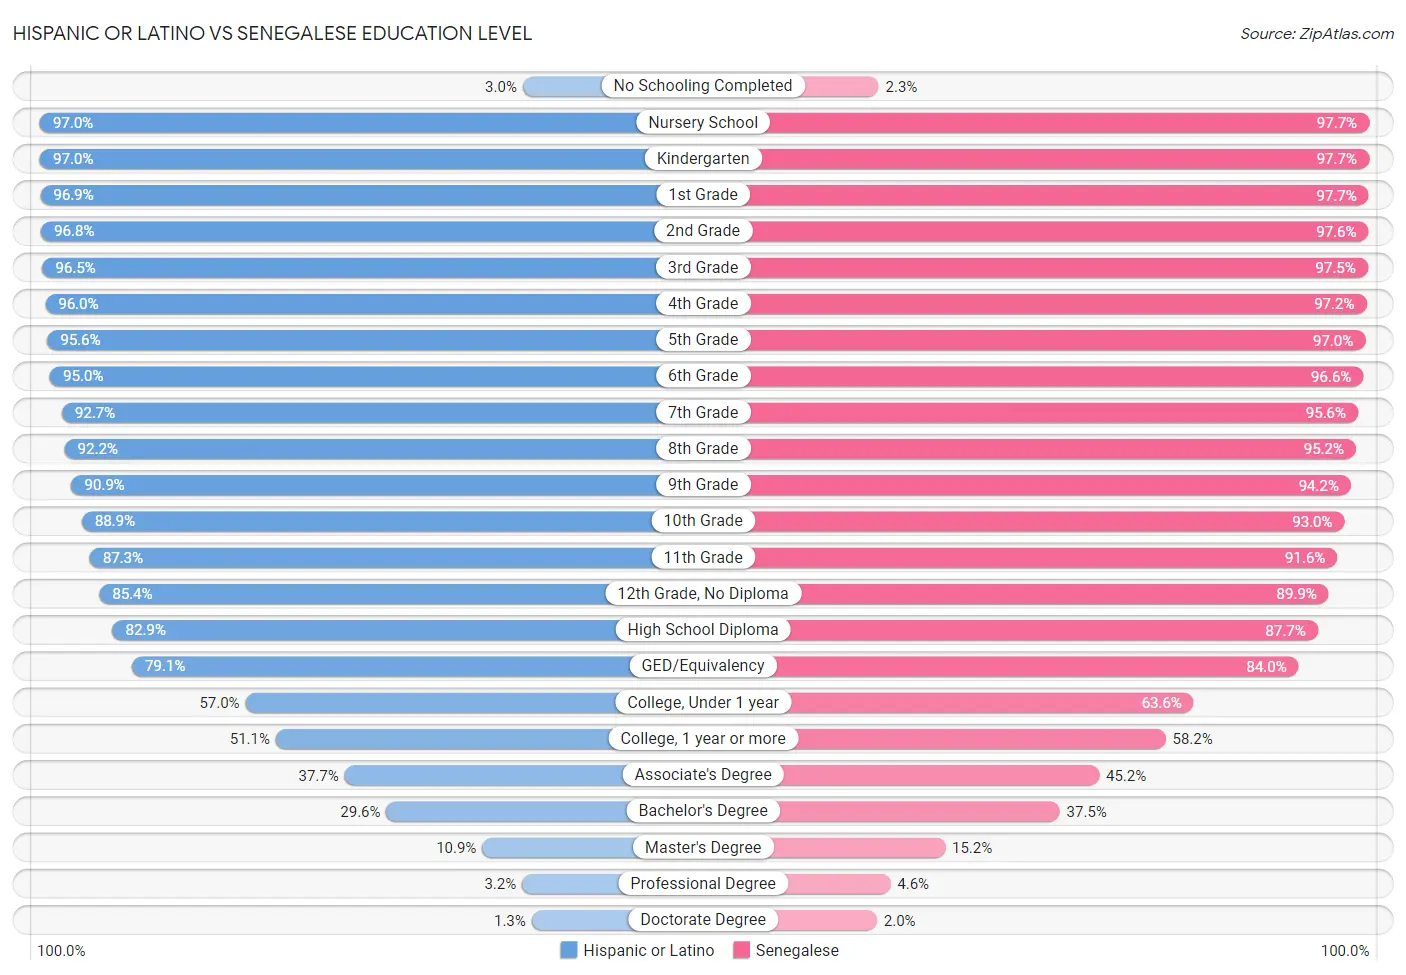 Hispanic or Latino vs Senegalese Education Level